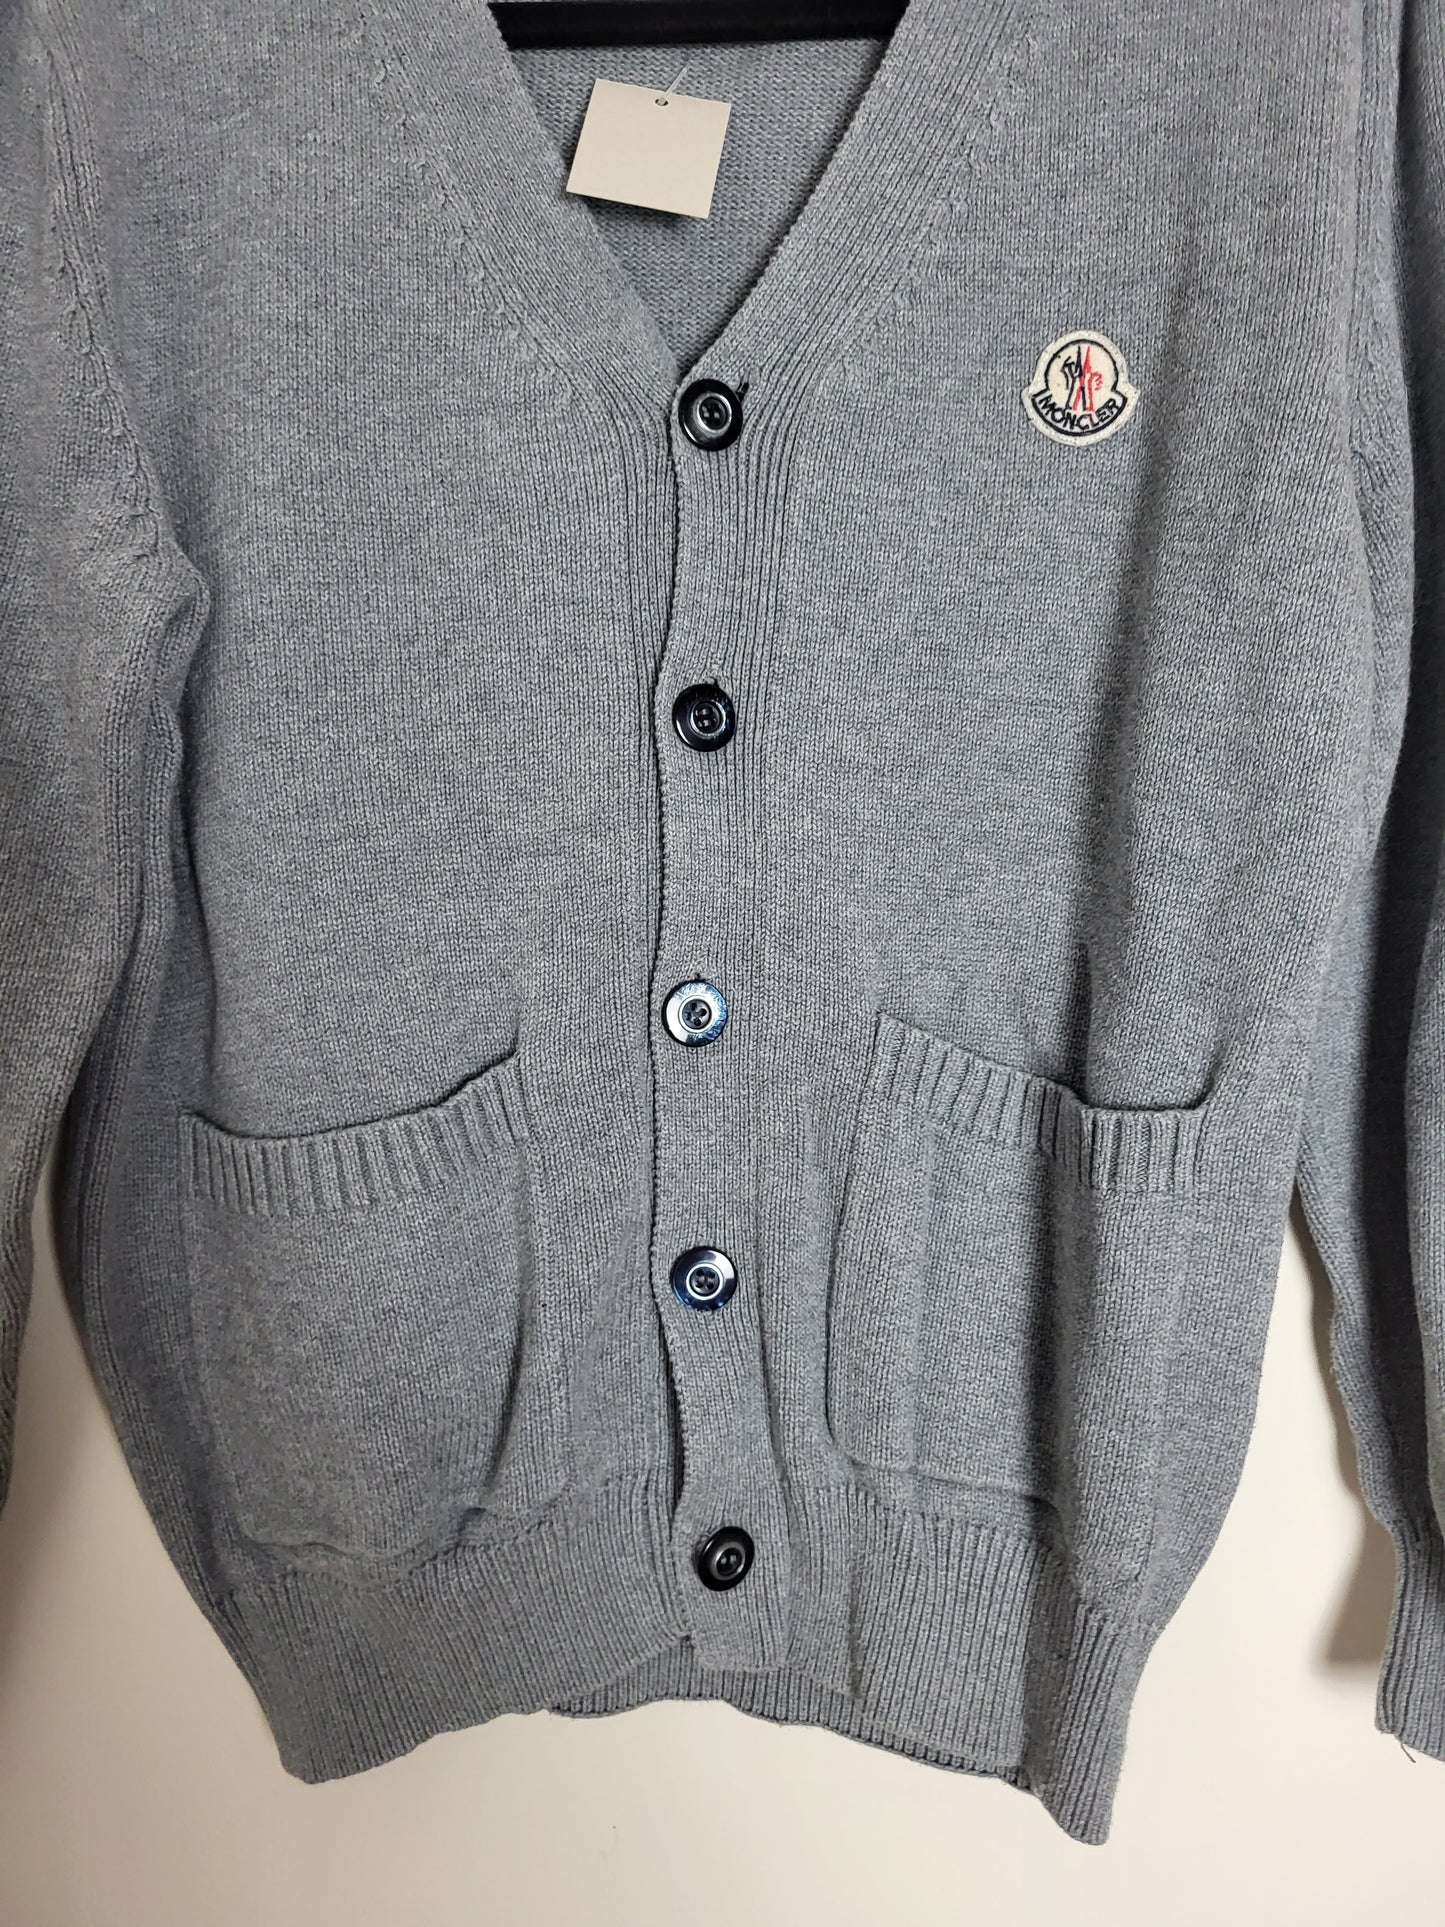 MONCLER - Vintage Cardigan / Pullover - Klassisch - Grau - Herren - M/L